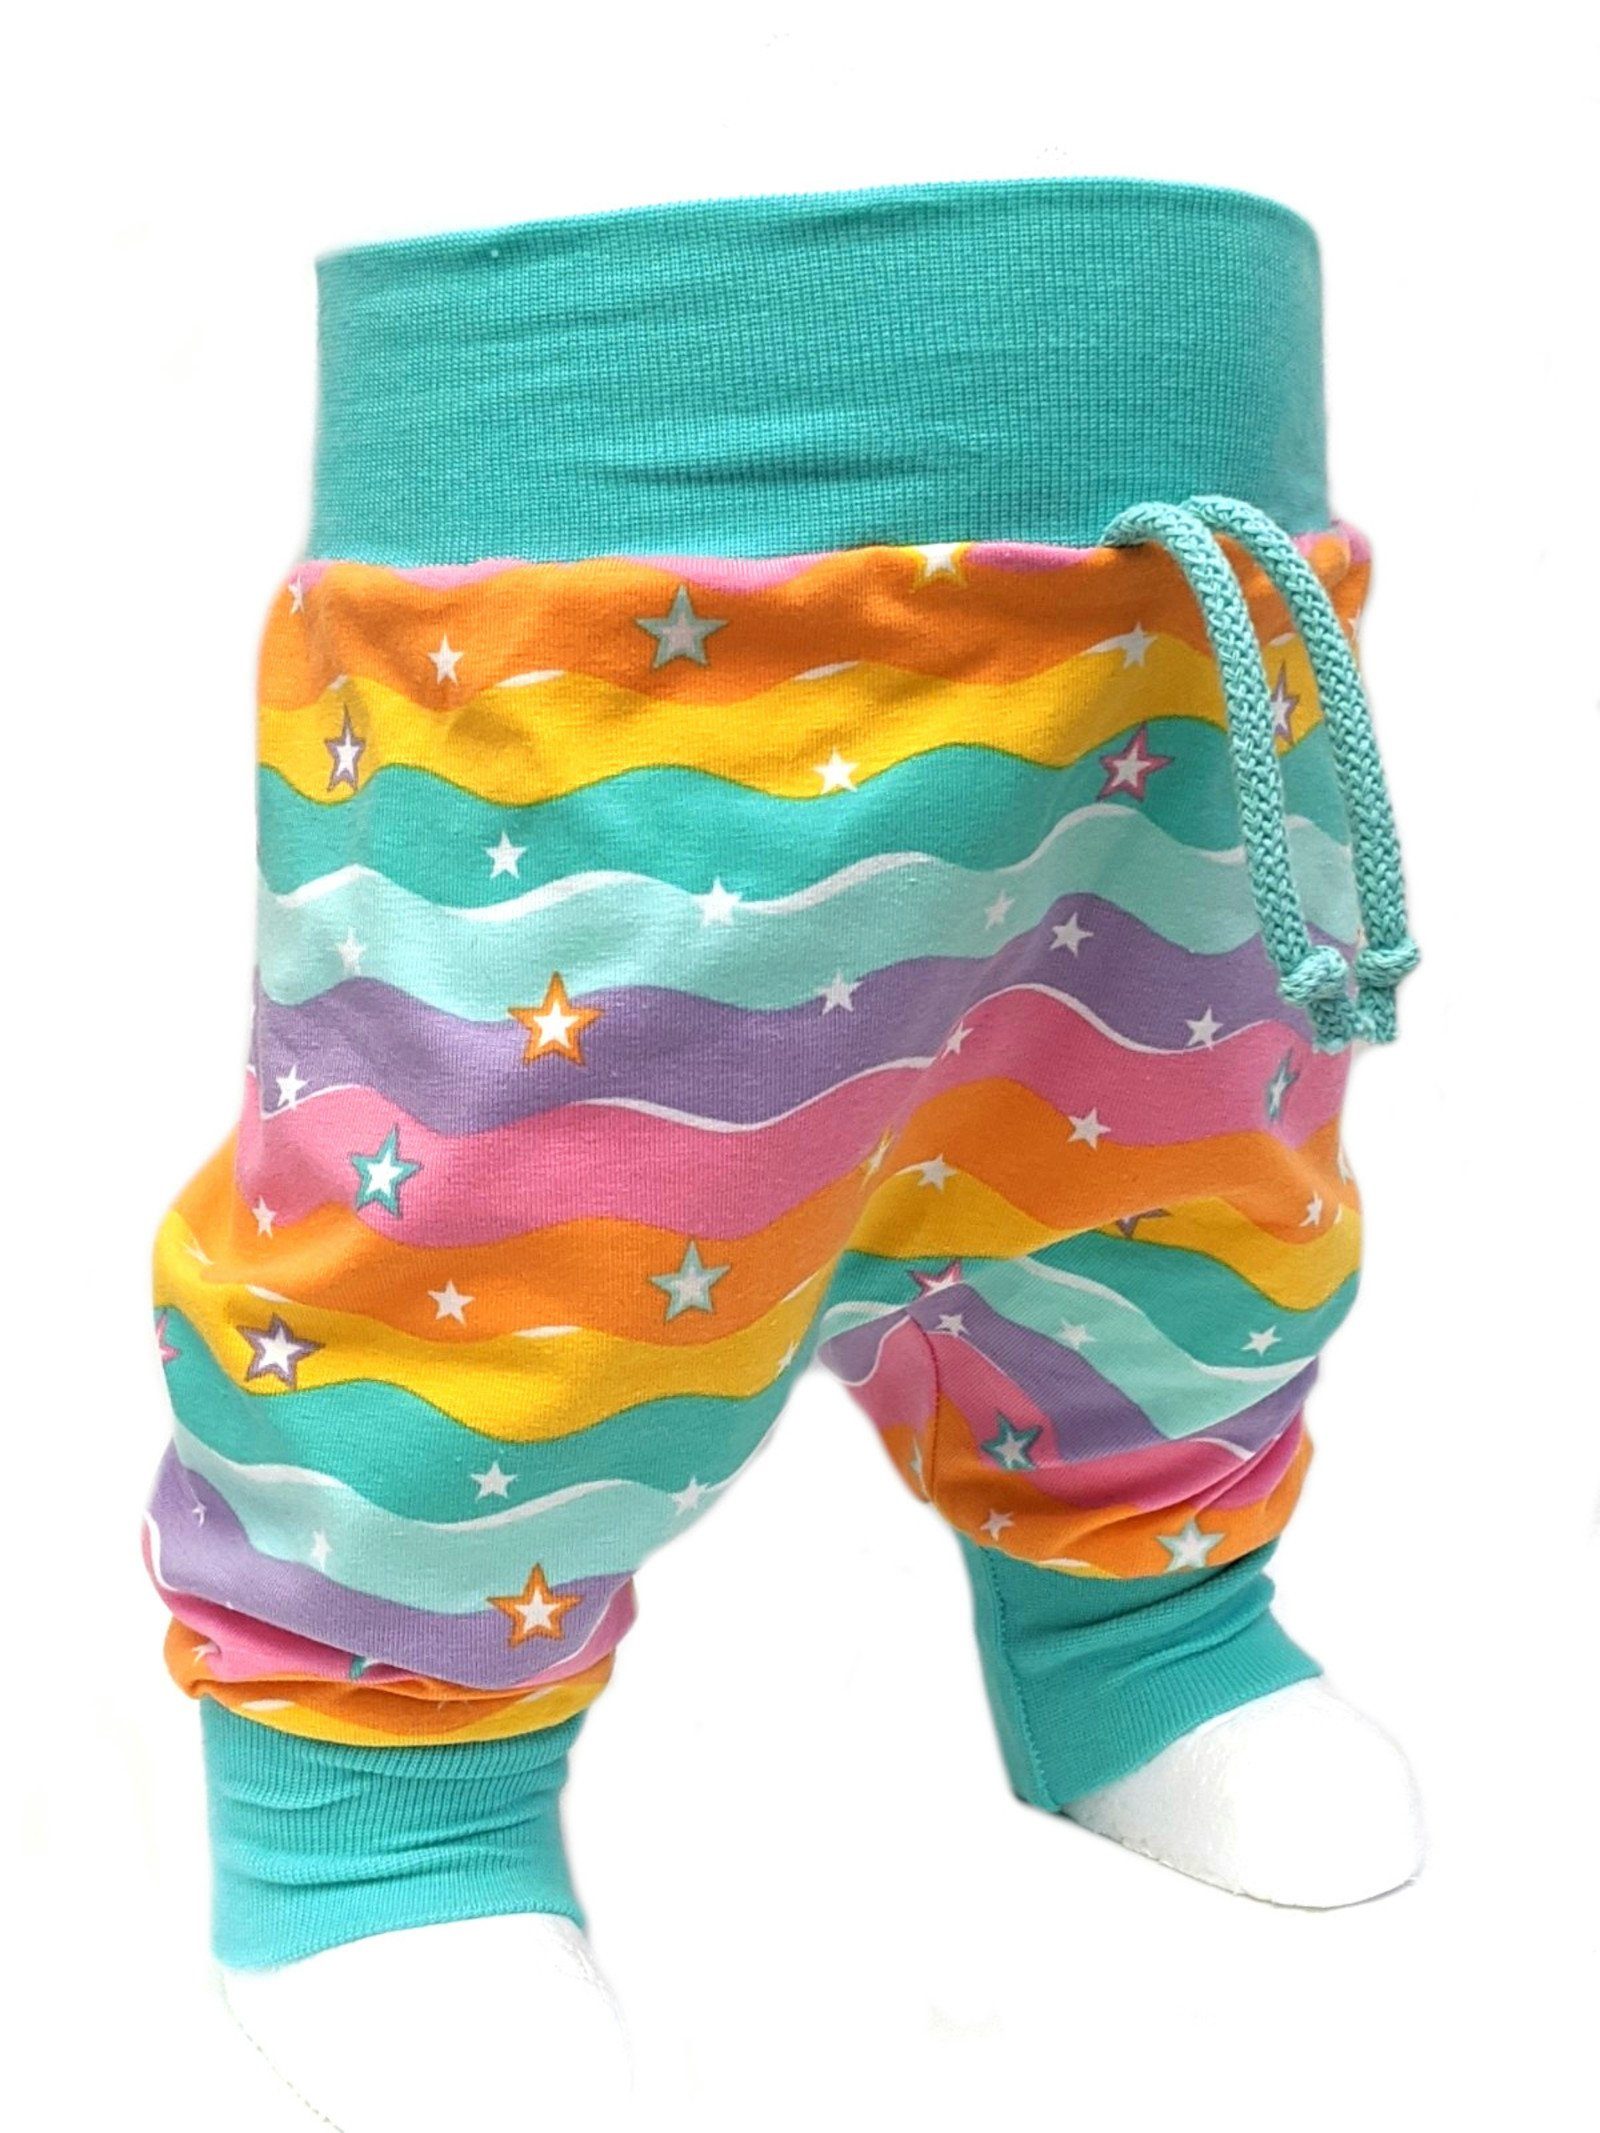 - Pumphose Gr. Kinderhose Spielhose Sterne Pastelltöne mit Regenbogen Baby Pumphose Corileo 50 104